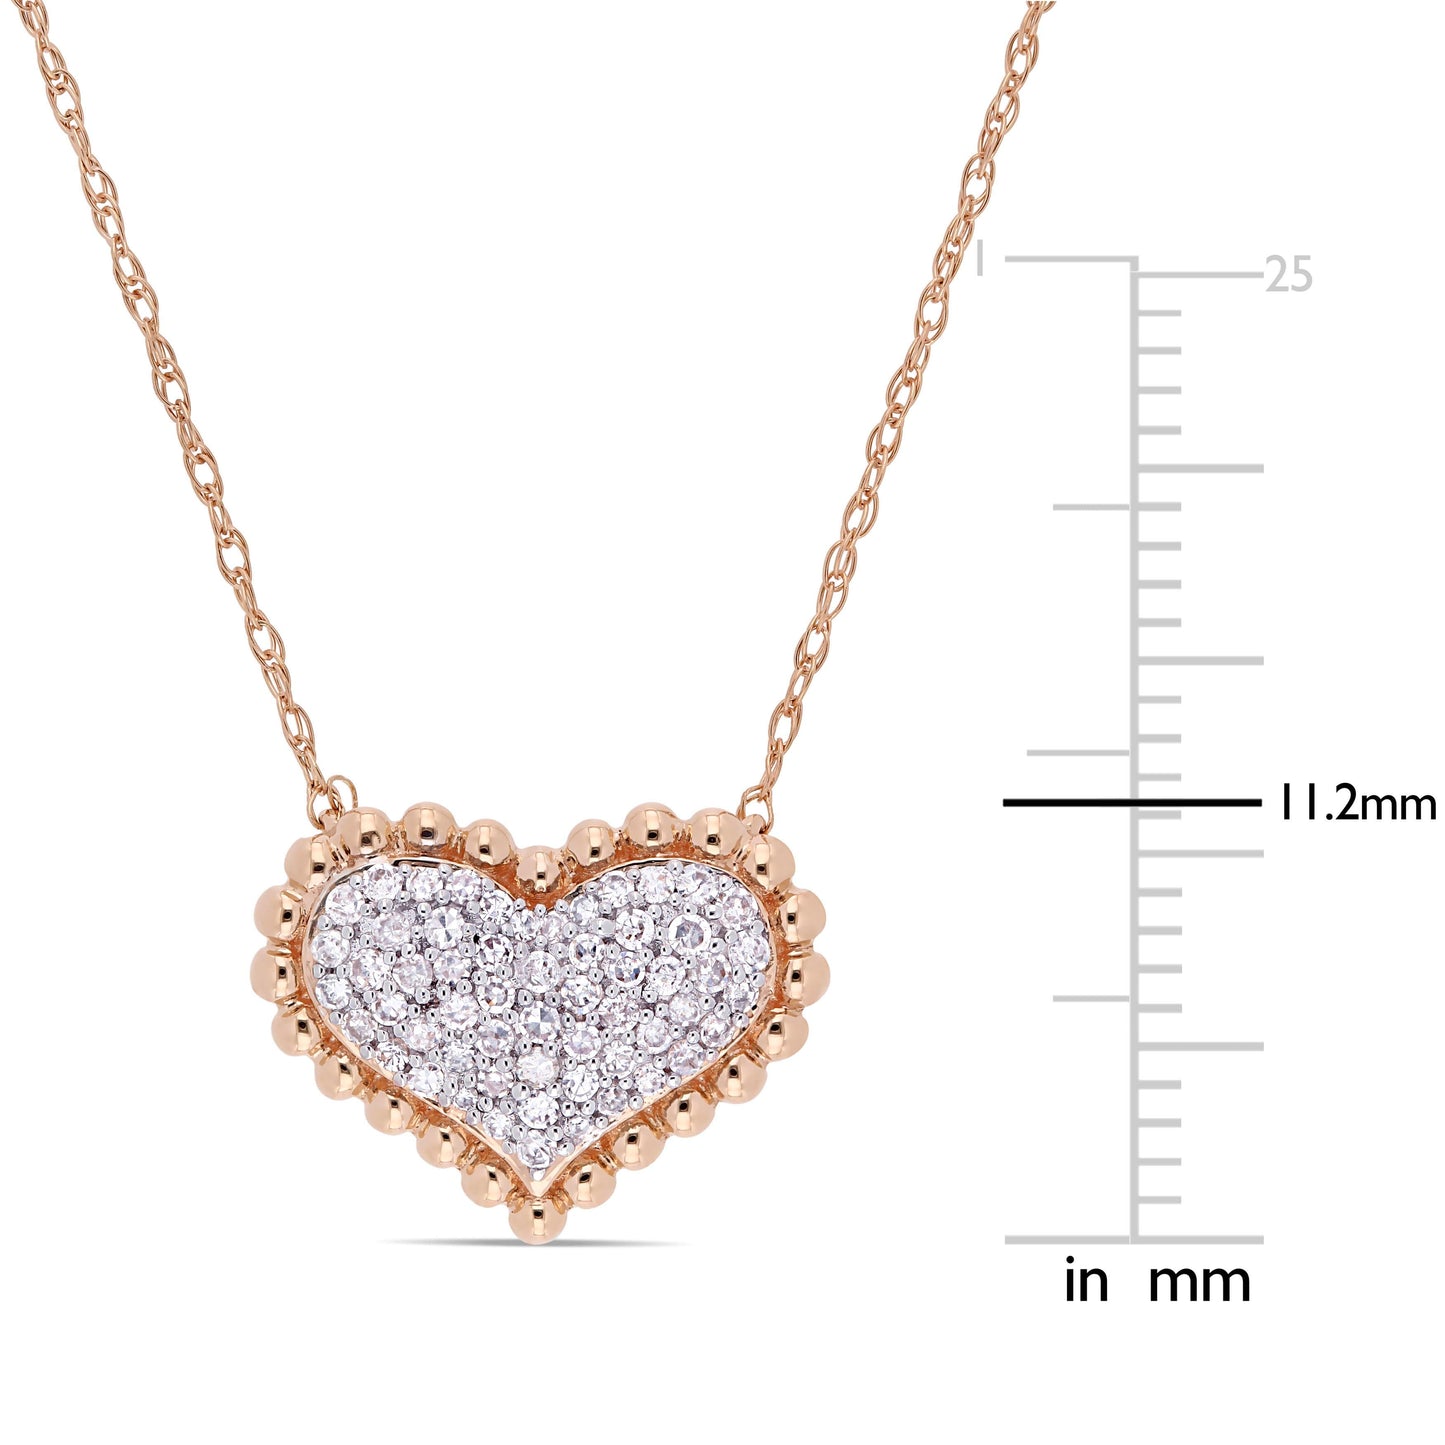 Julie Leah Diamond Clustered Heart Necklace in 10k Rose Gold